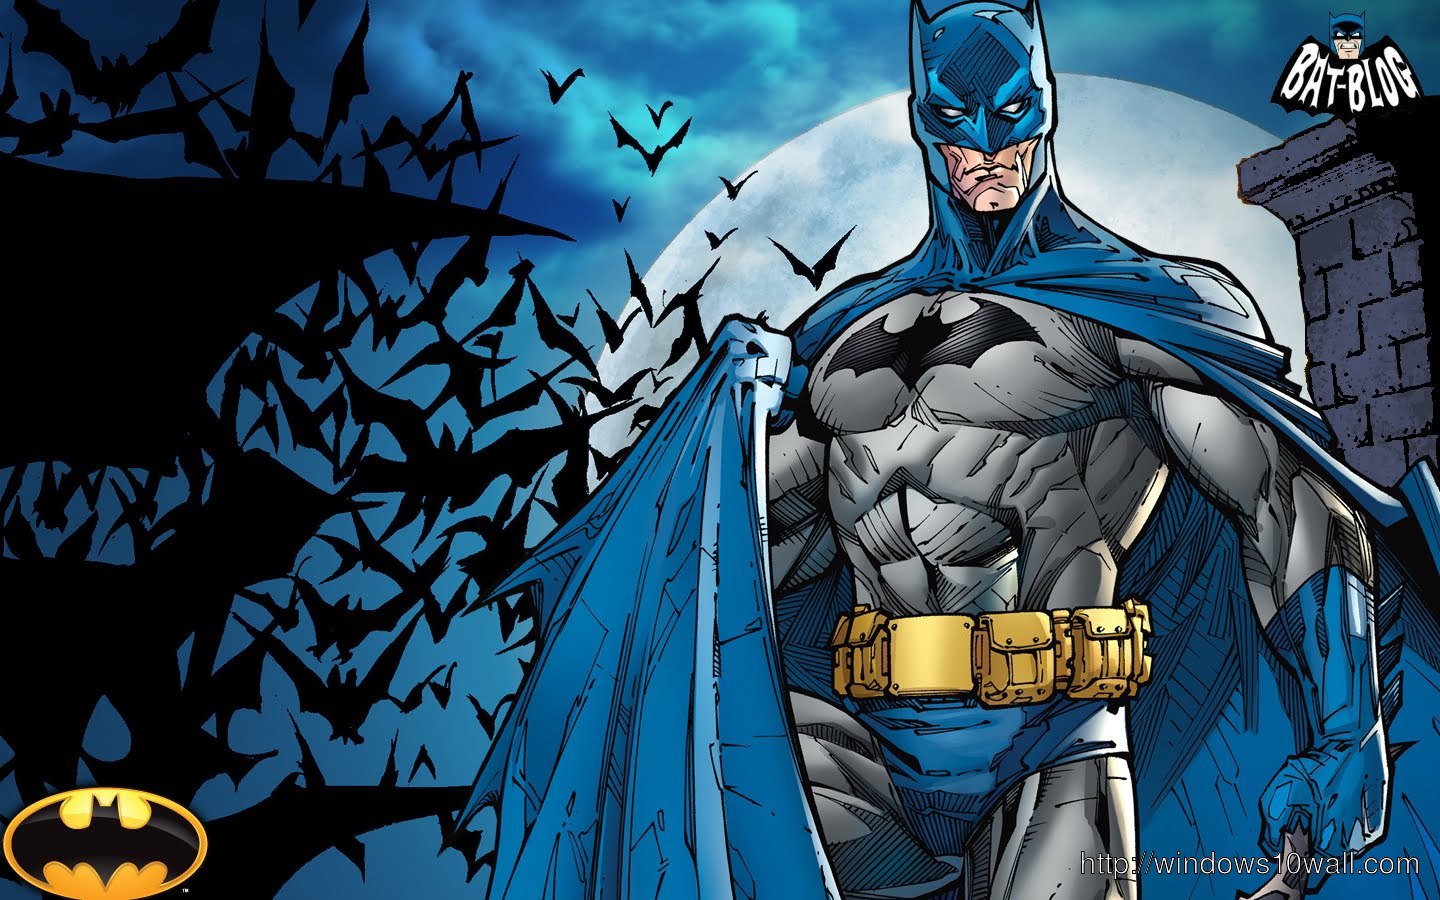 Batman live cartoon wallpaper free download - windows 10 